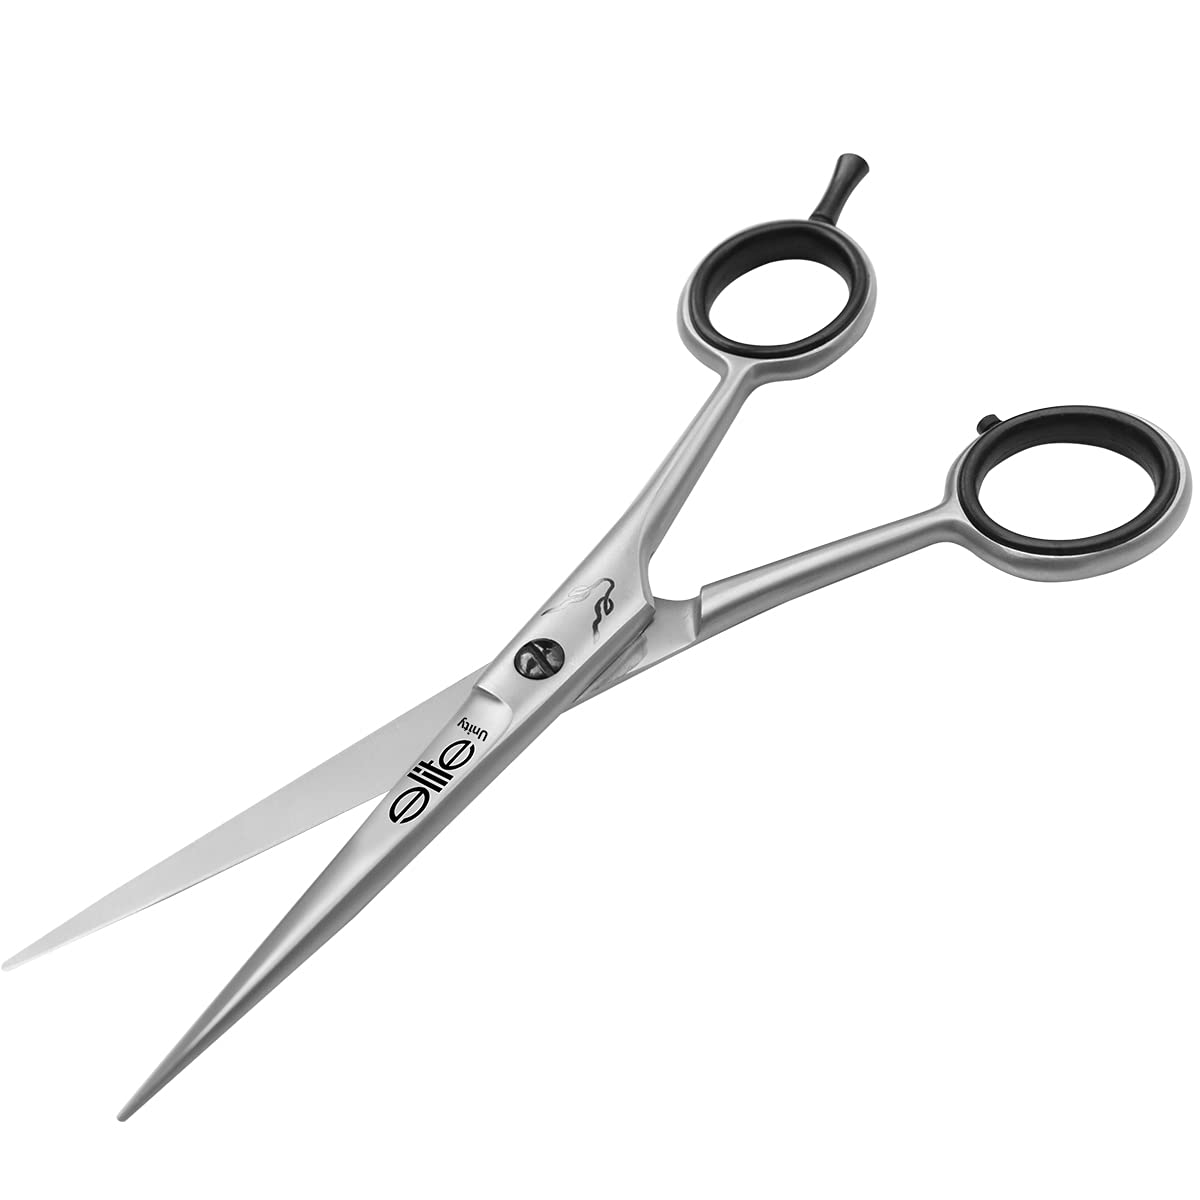 Hair Cutting Scissors, Barber Shears - Elite Unity 6.5 Inch Professional  Hair Scissors - Razor Edge Sharp Scissors for Barber Kit, Haircut, Trimming  Men/Women. For Salon and Home use